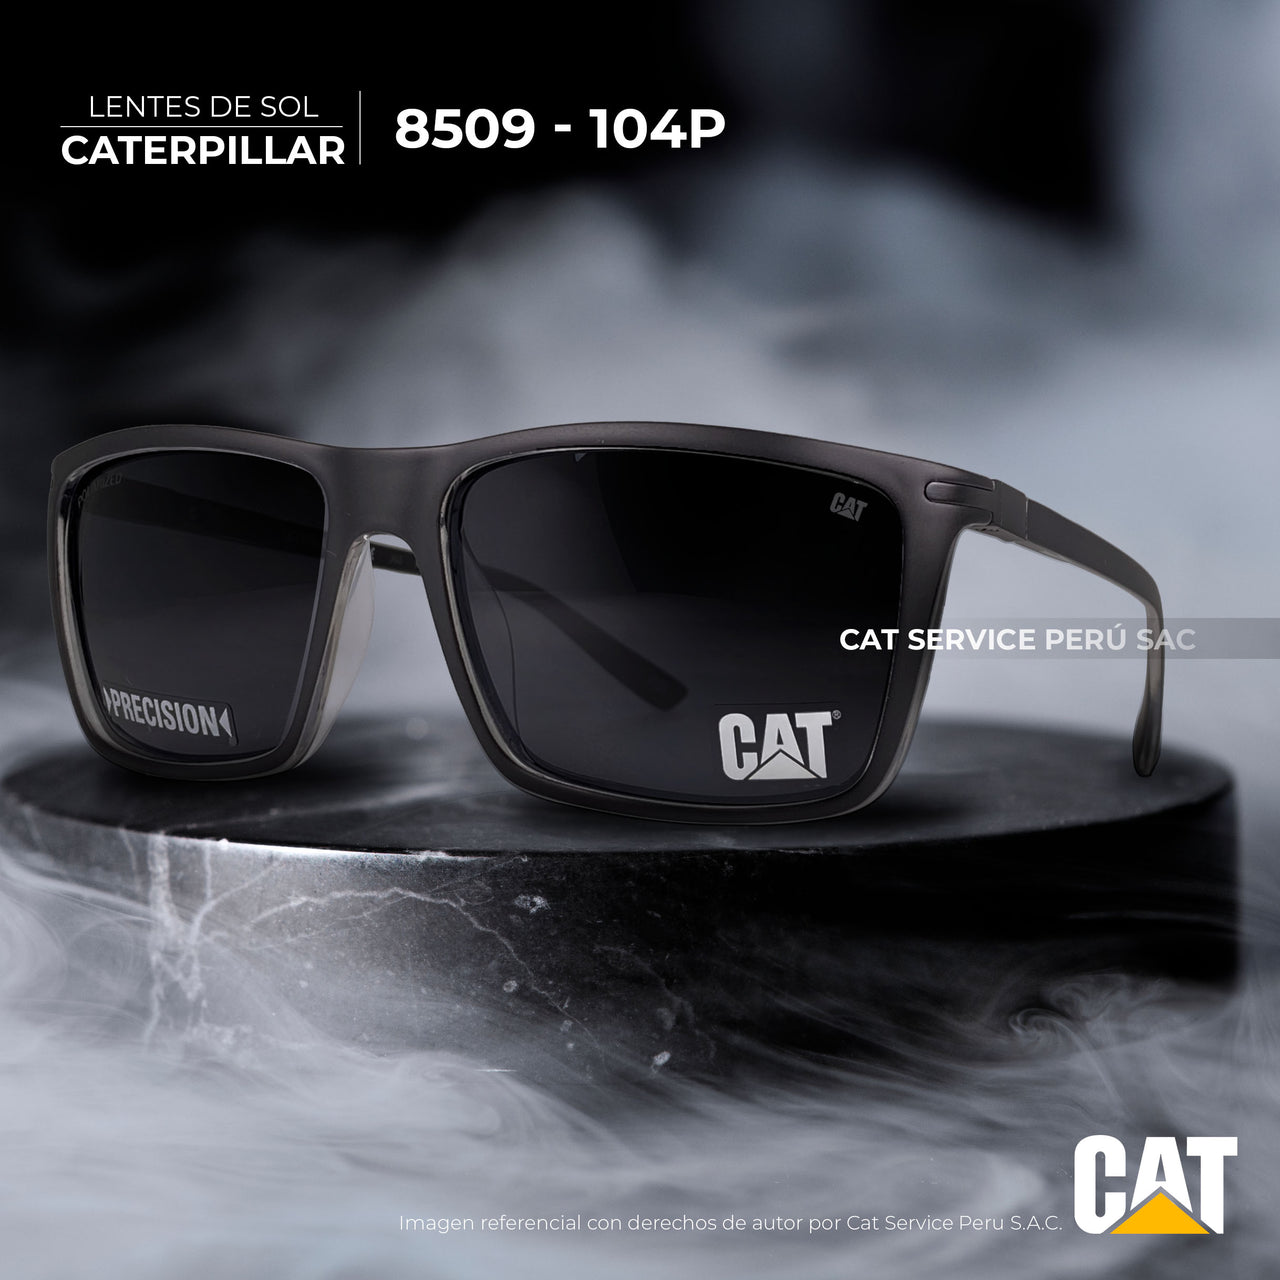 Cat CPS-8509-104P Polarized Gray Moons Sunglasses 